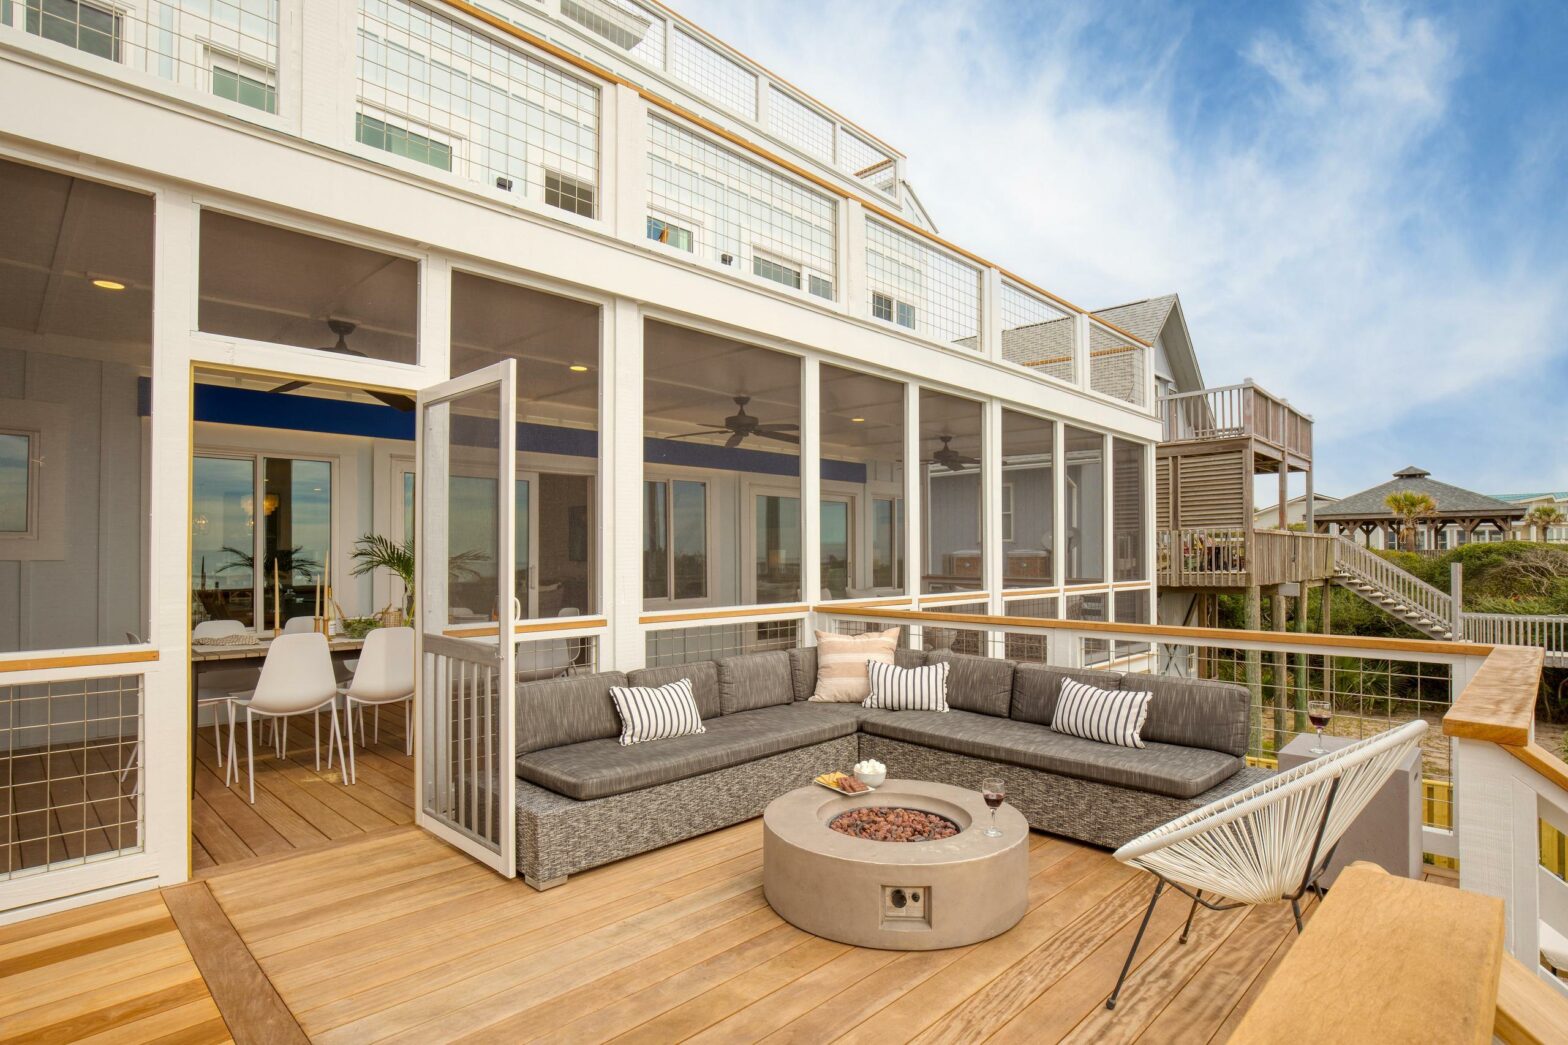 AvantStay Charleston vacation rental home outdoor living space